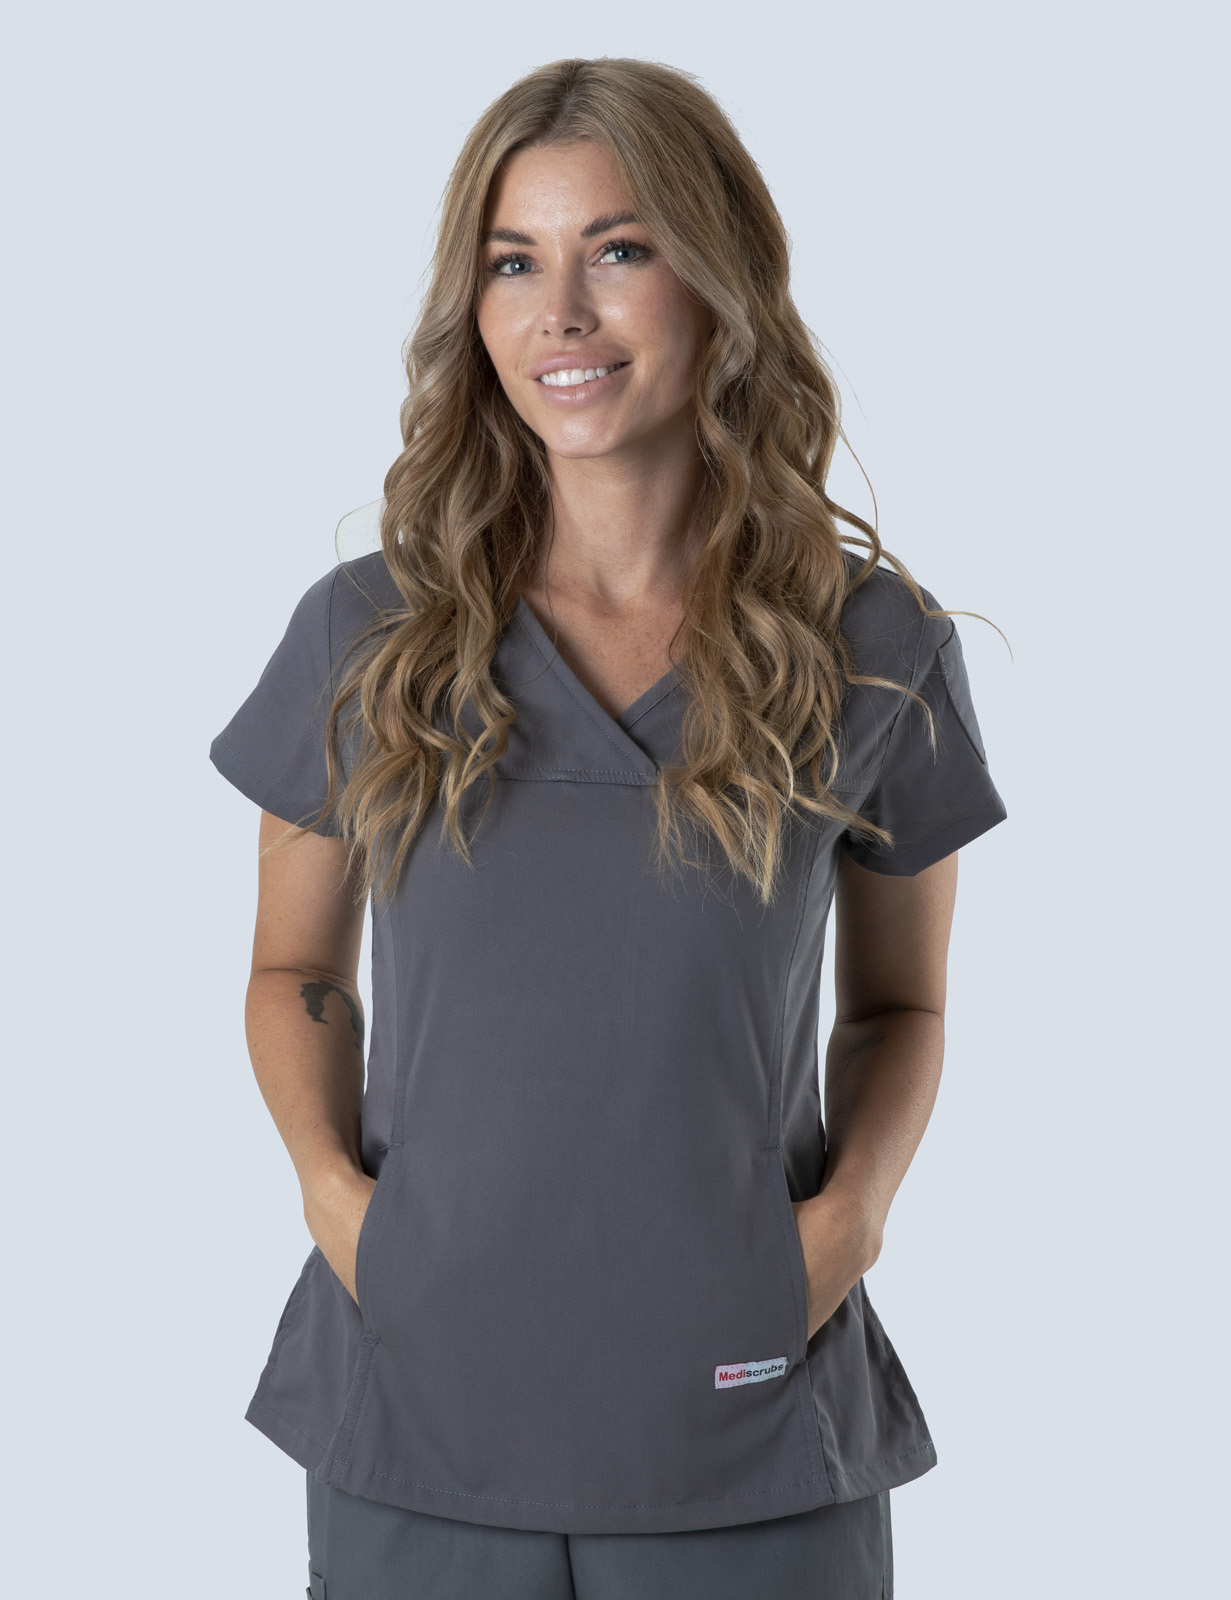 Queensland Children's Hospital Emergency Department Clinical Facilitator Uniform Top Bundle  (Women's Fit Top in Steel Grey incl Logos)